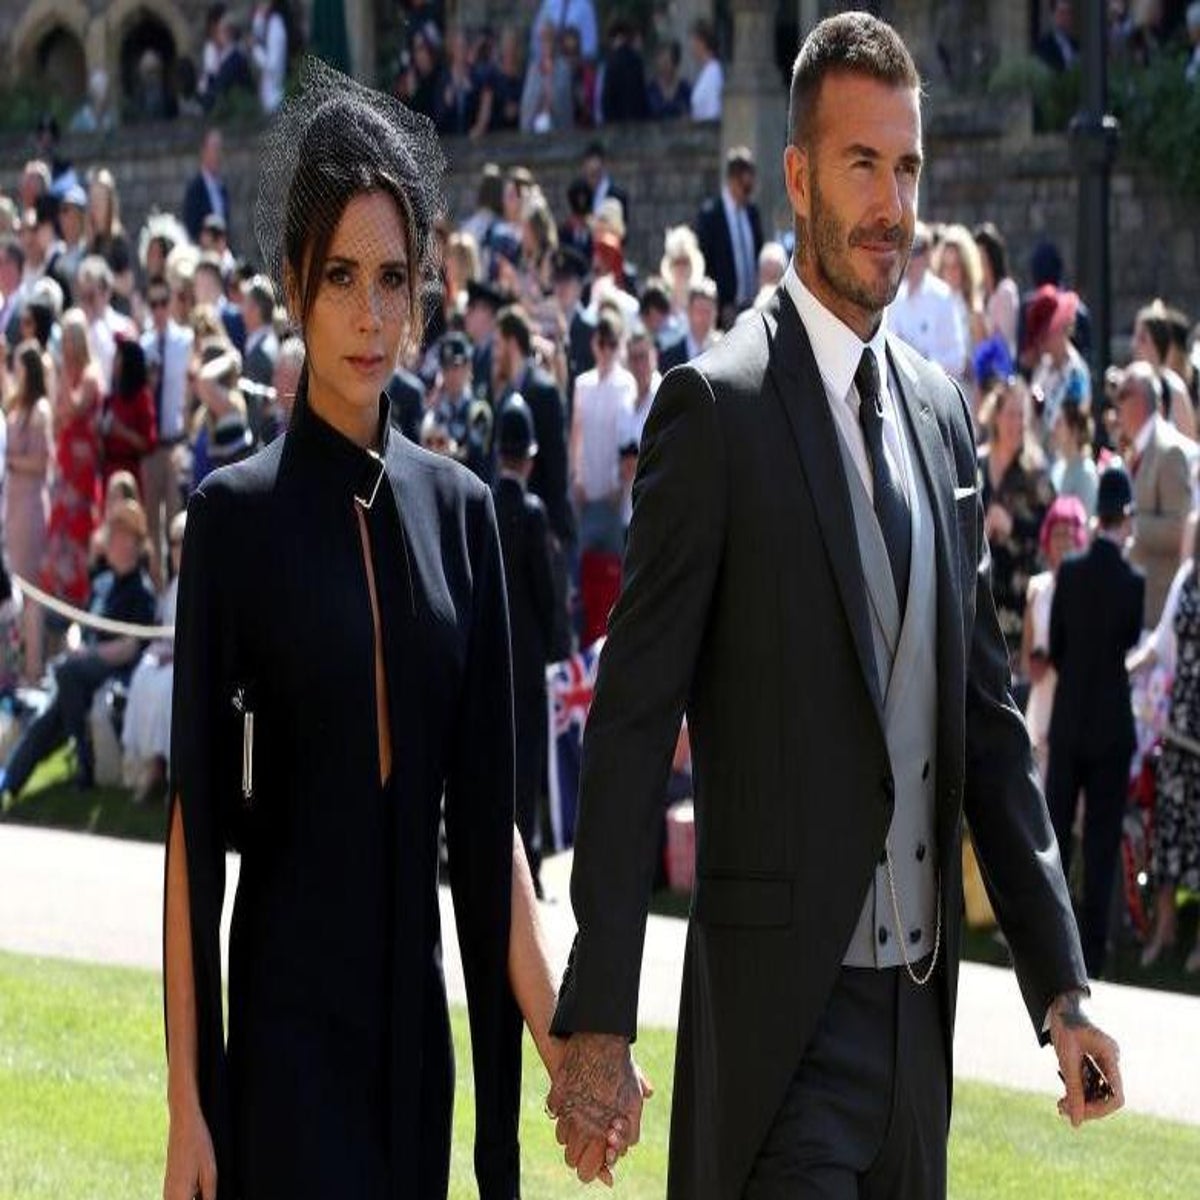 David Beckham attended the Royal Wedding wearing Kim Jones' first